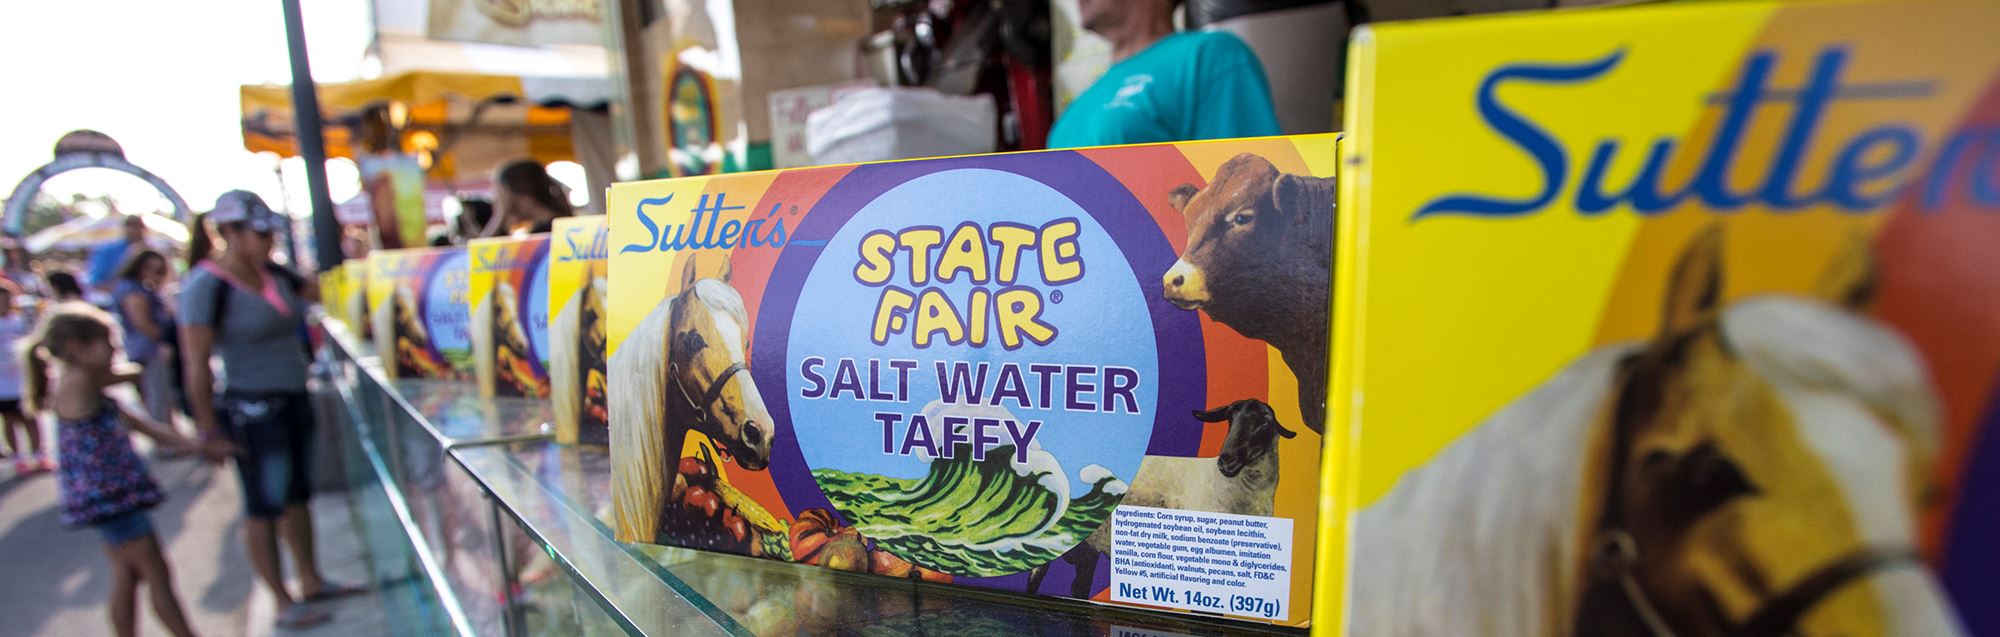 Vendor Information Indiana State Fair